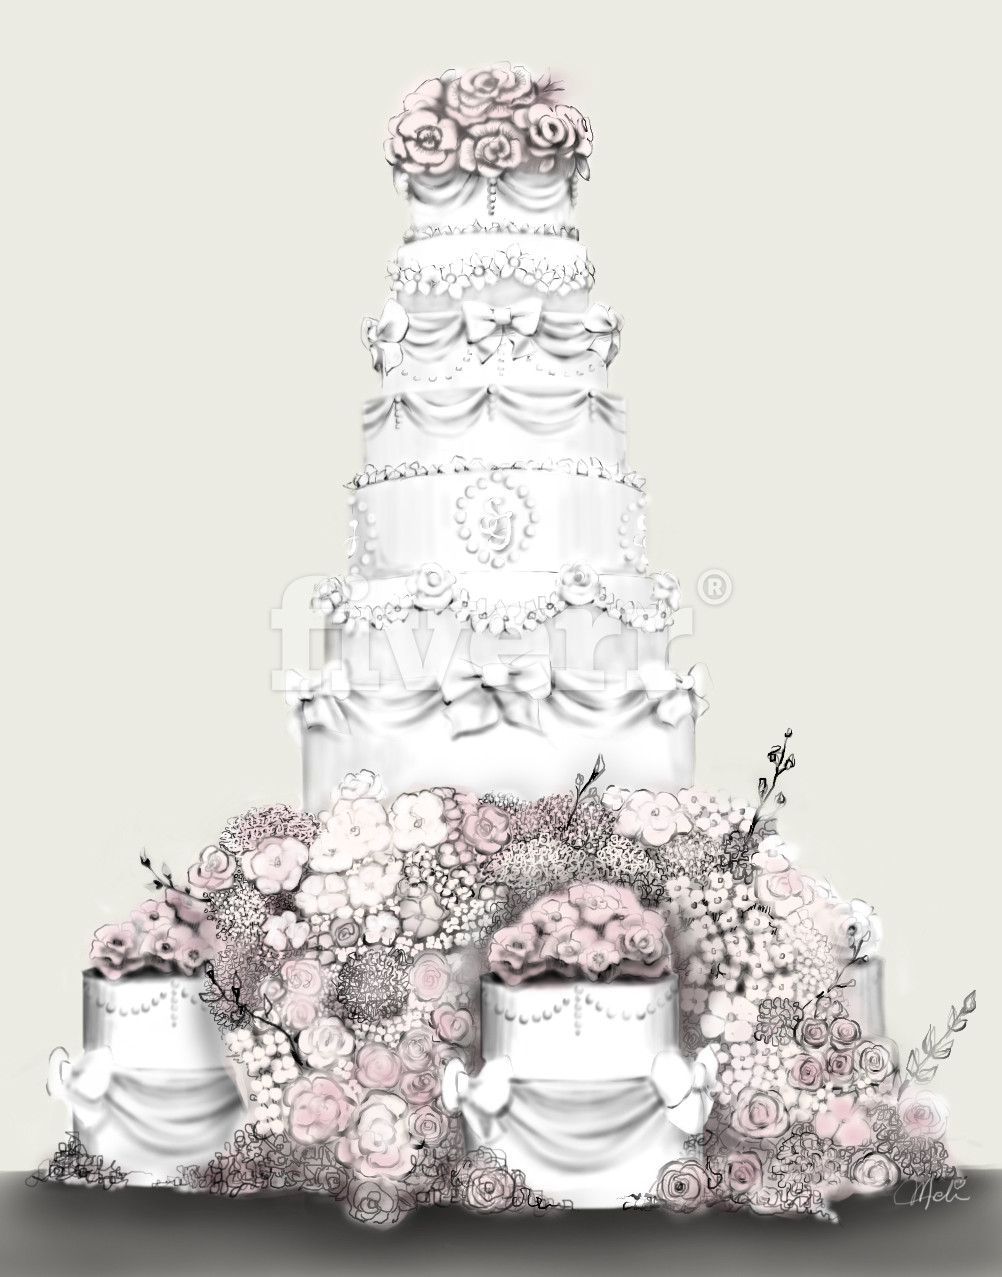 Irvine Wedding Cake 2018 Illustration